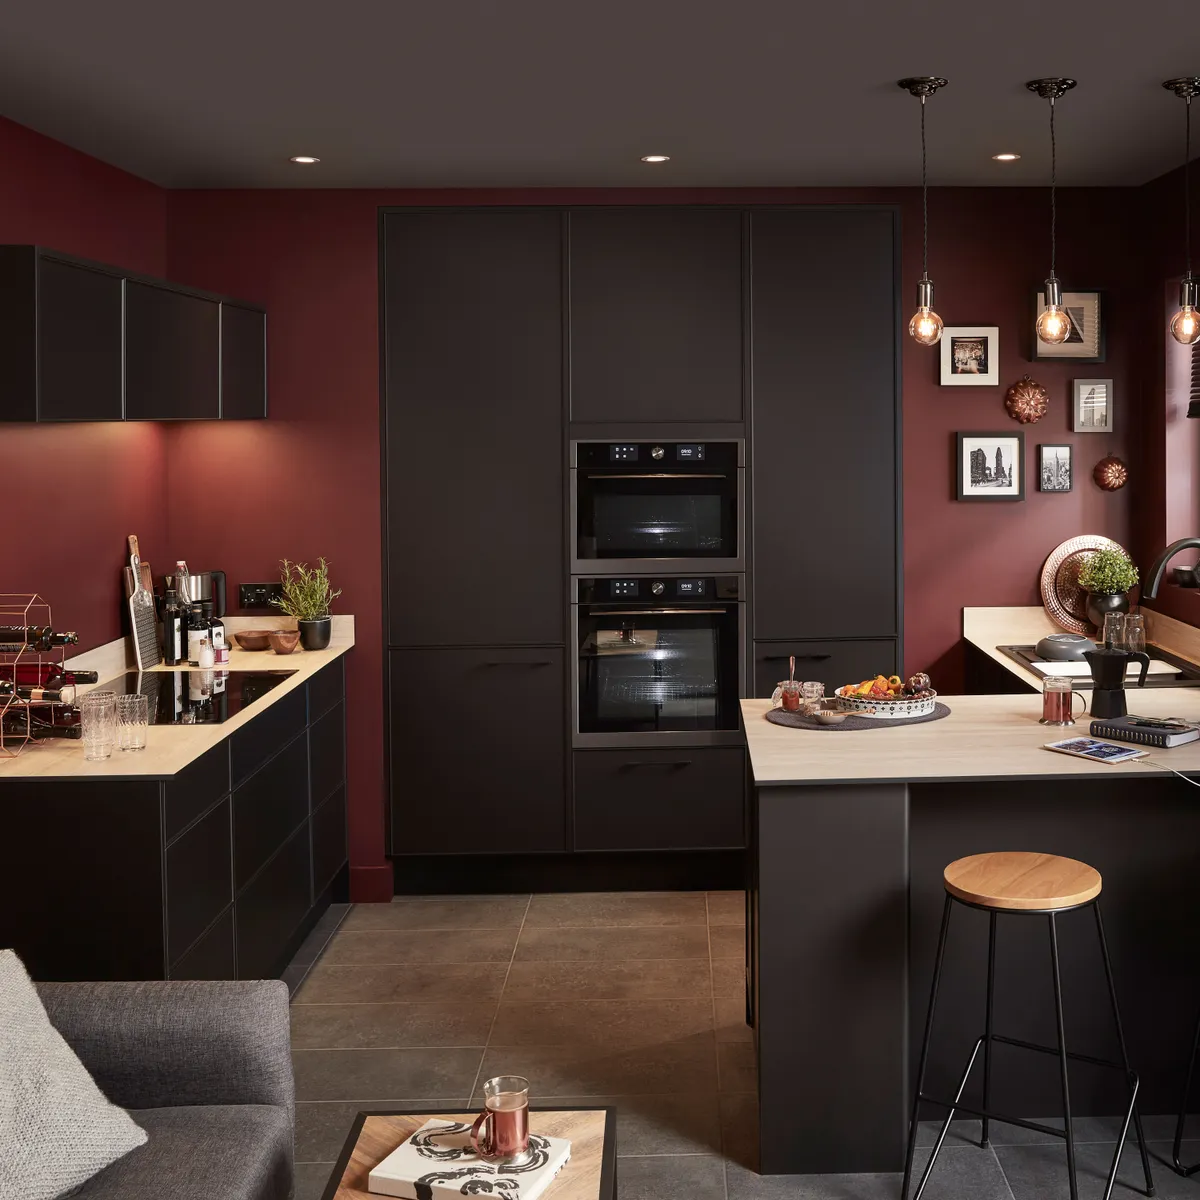 Pasilia matt carbon thin frame kitchen, from £1,298 for an eight-unit kitchen, B&Q